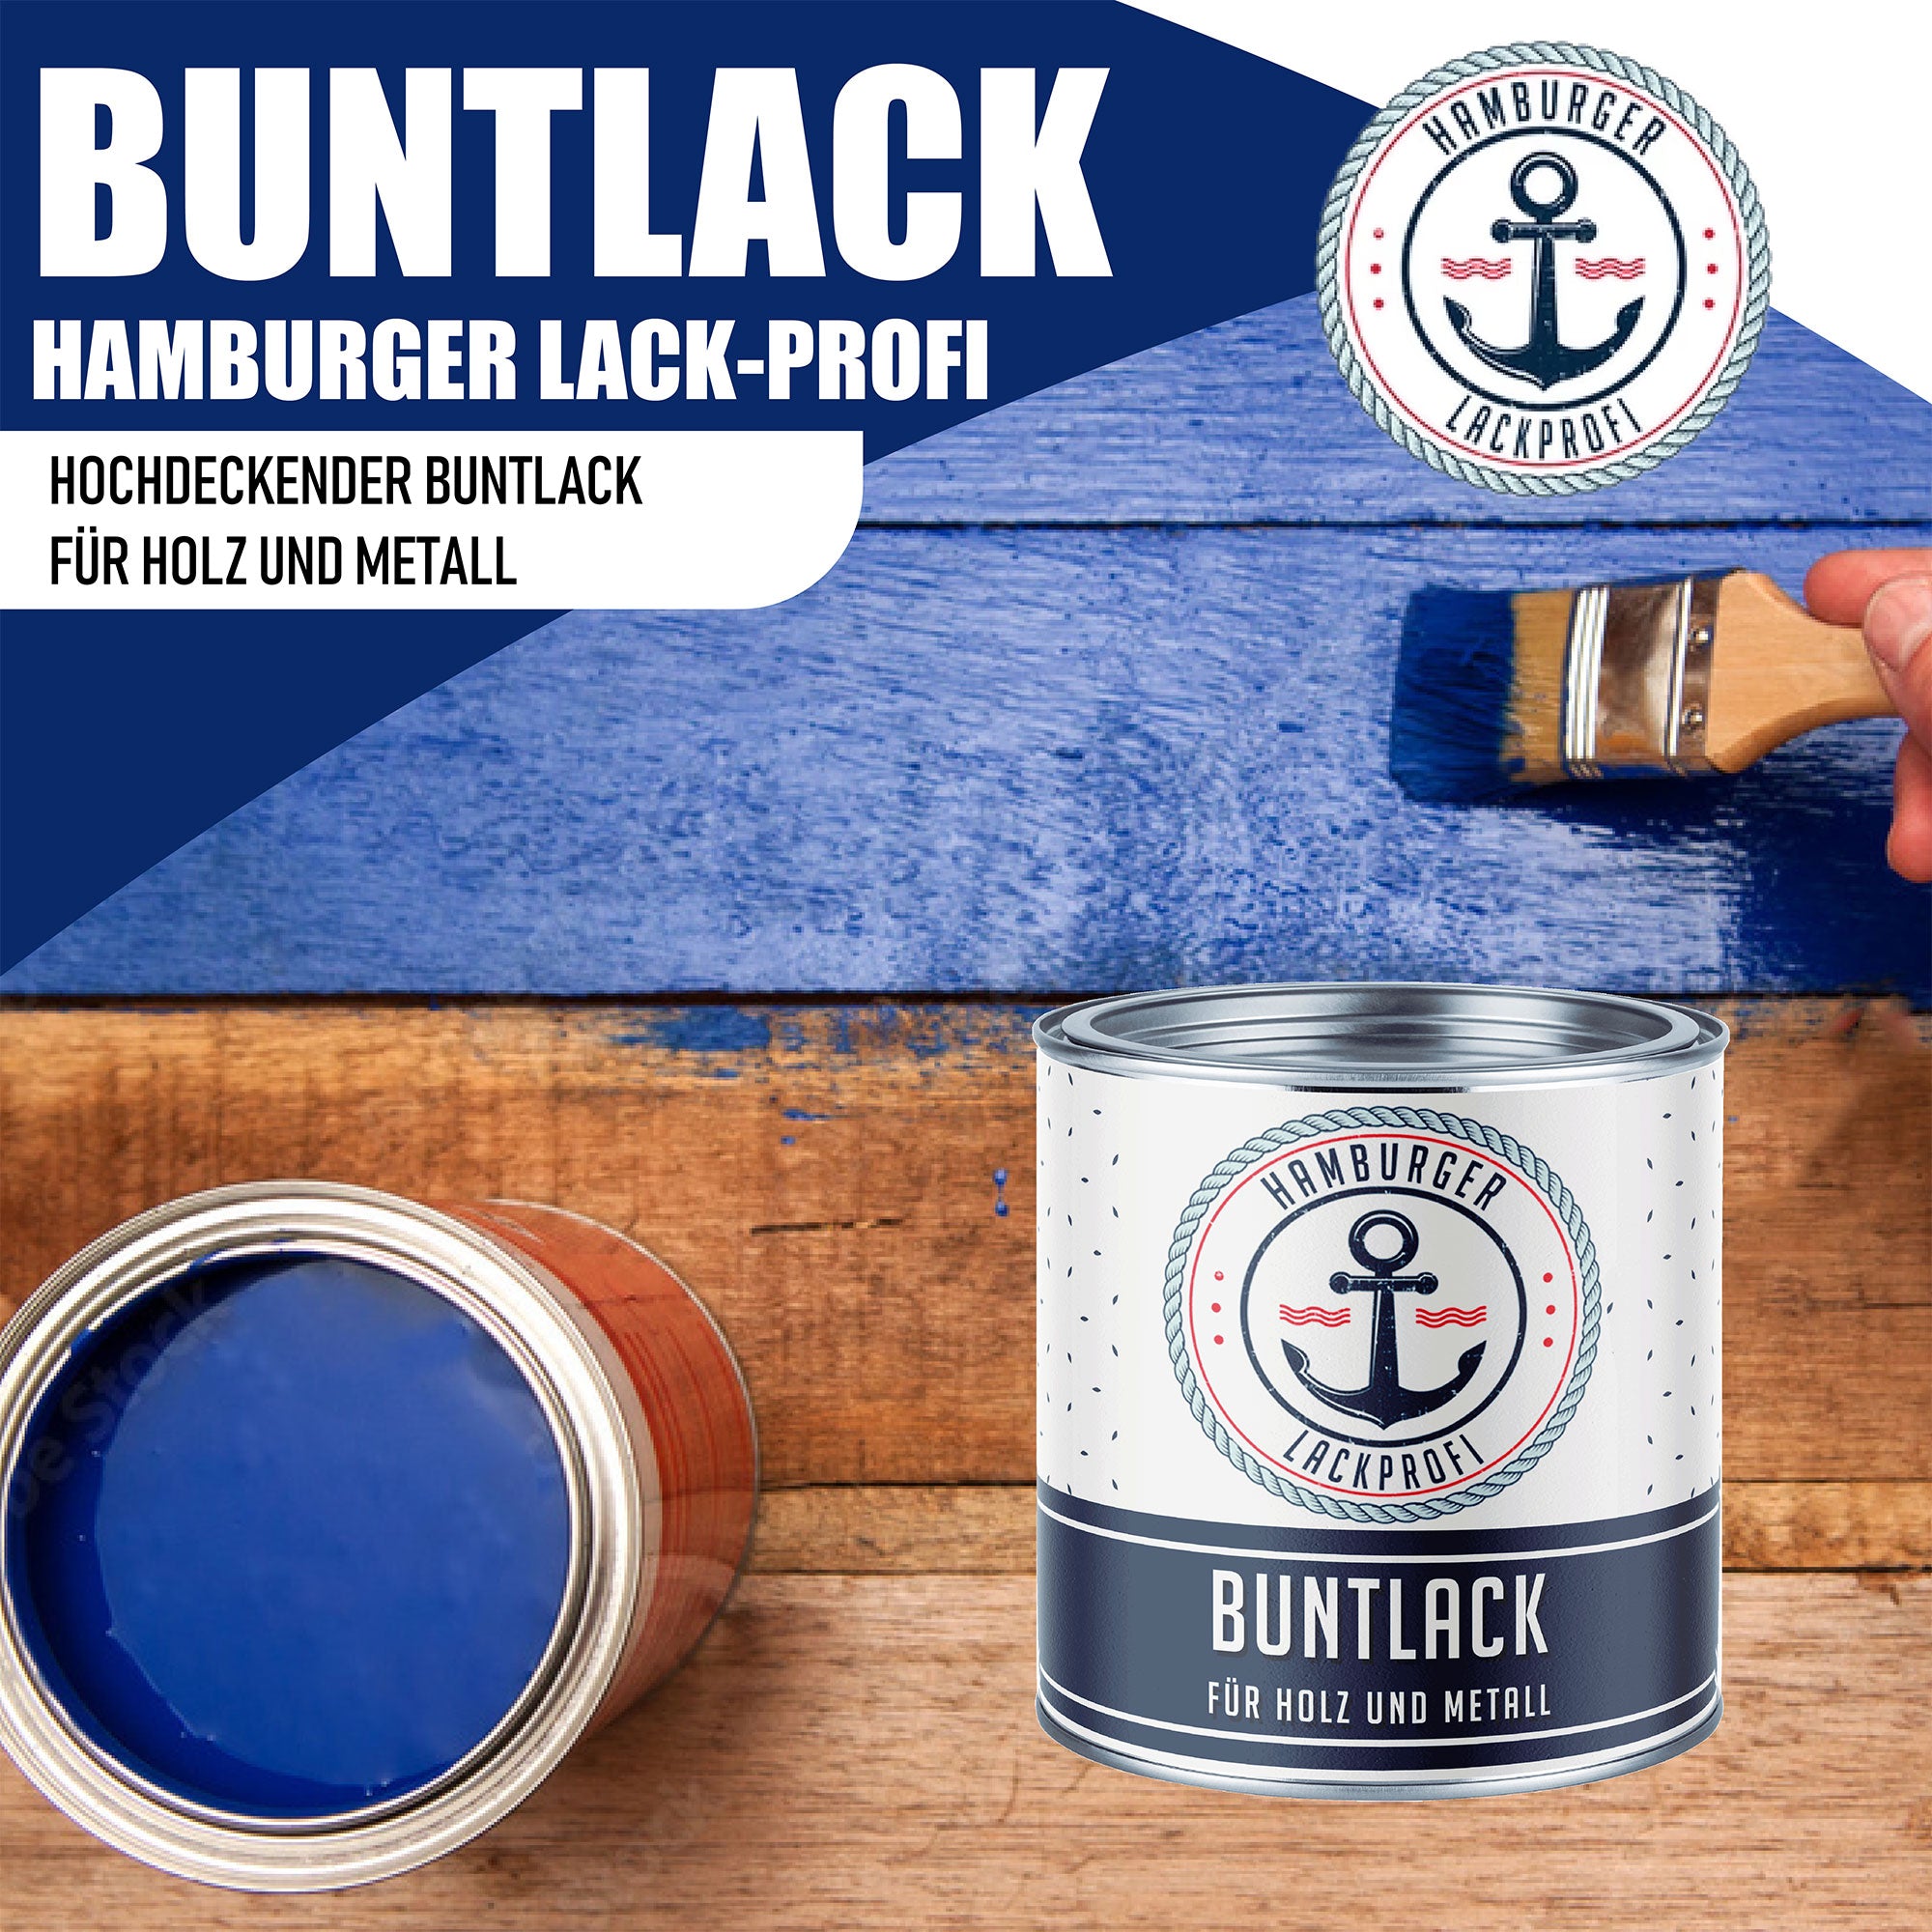 Hamburger Lack-Profi Buntlack in Schiefergrau RAL 7015 mit Lackierset (X300) & Verdünnung (1 L) - 30% Sparangebot